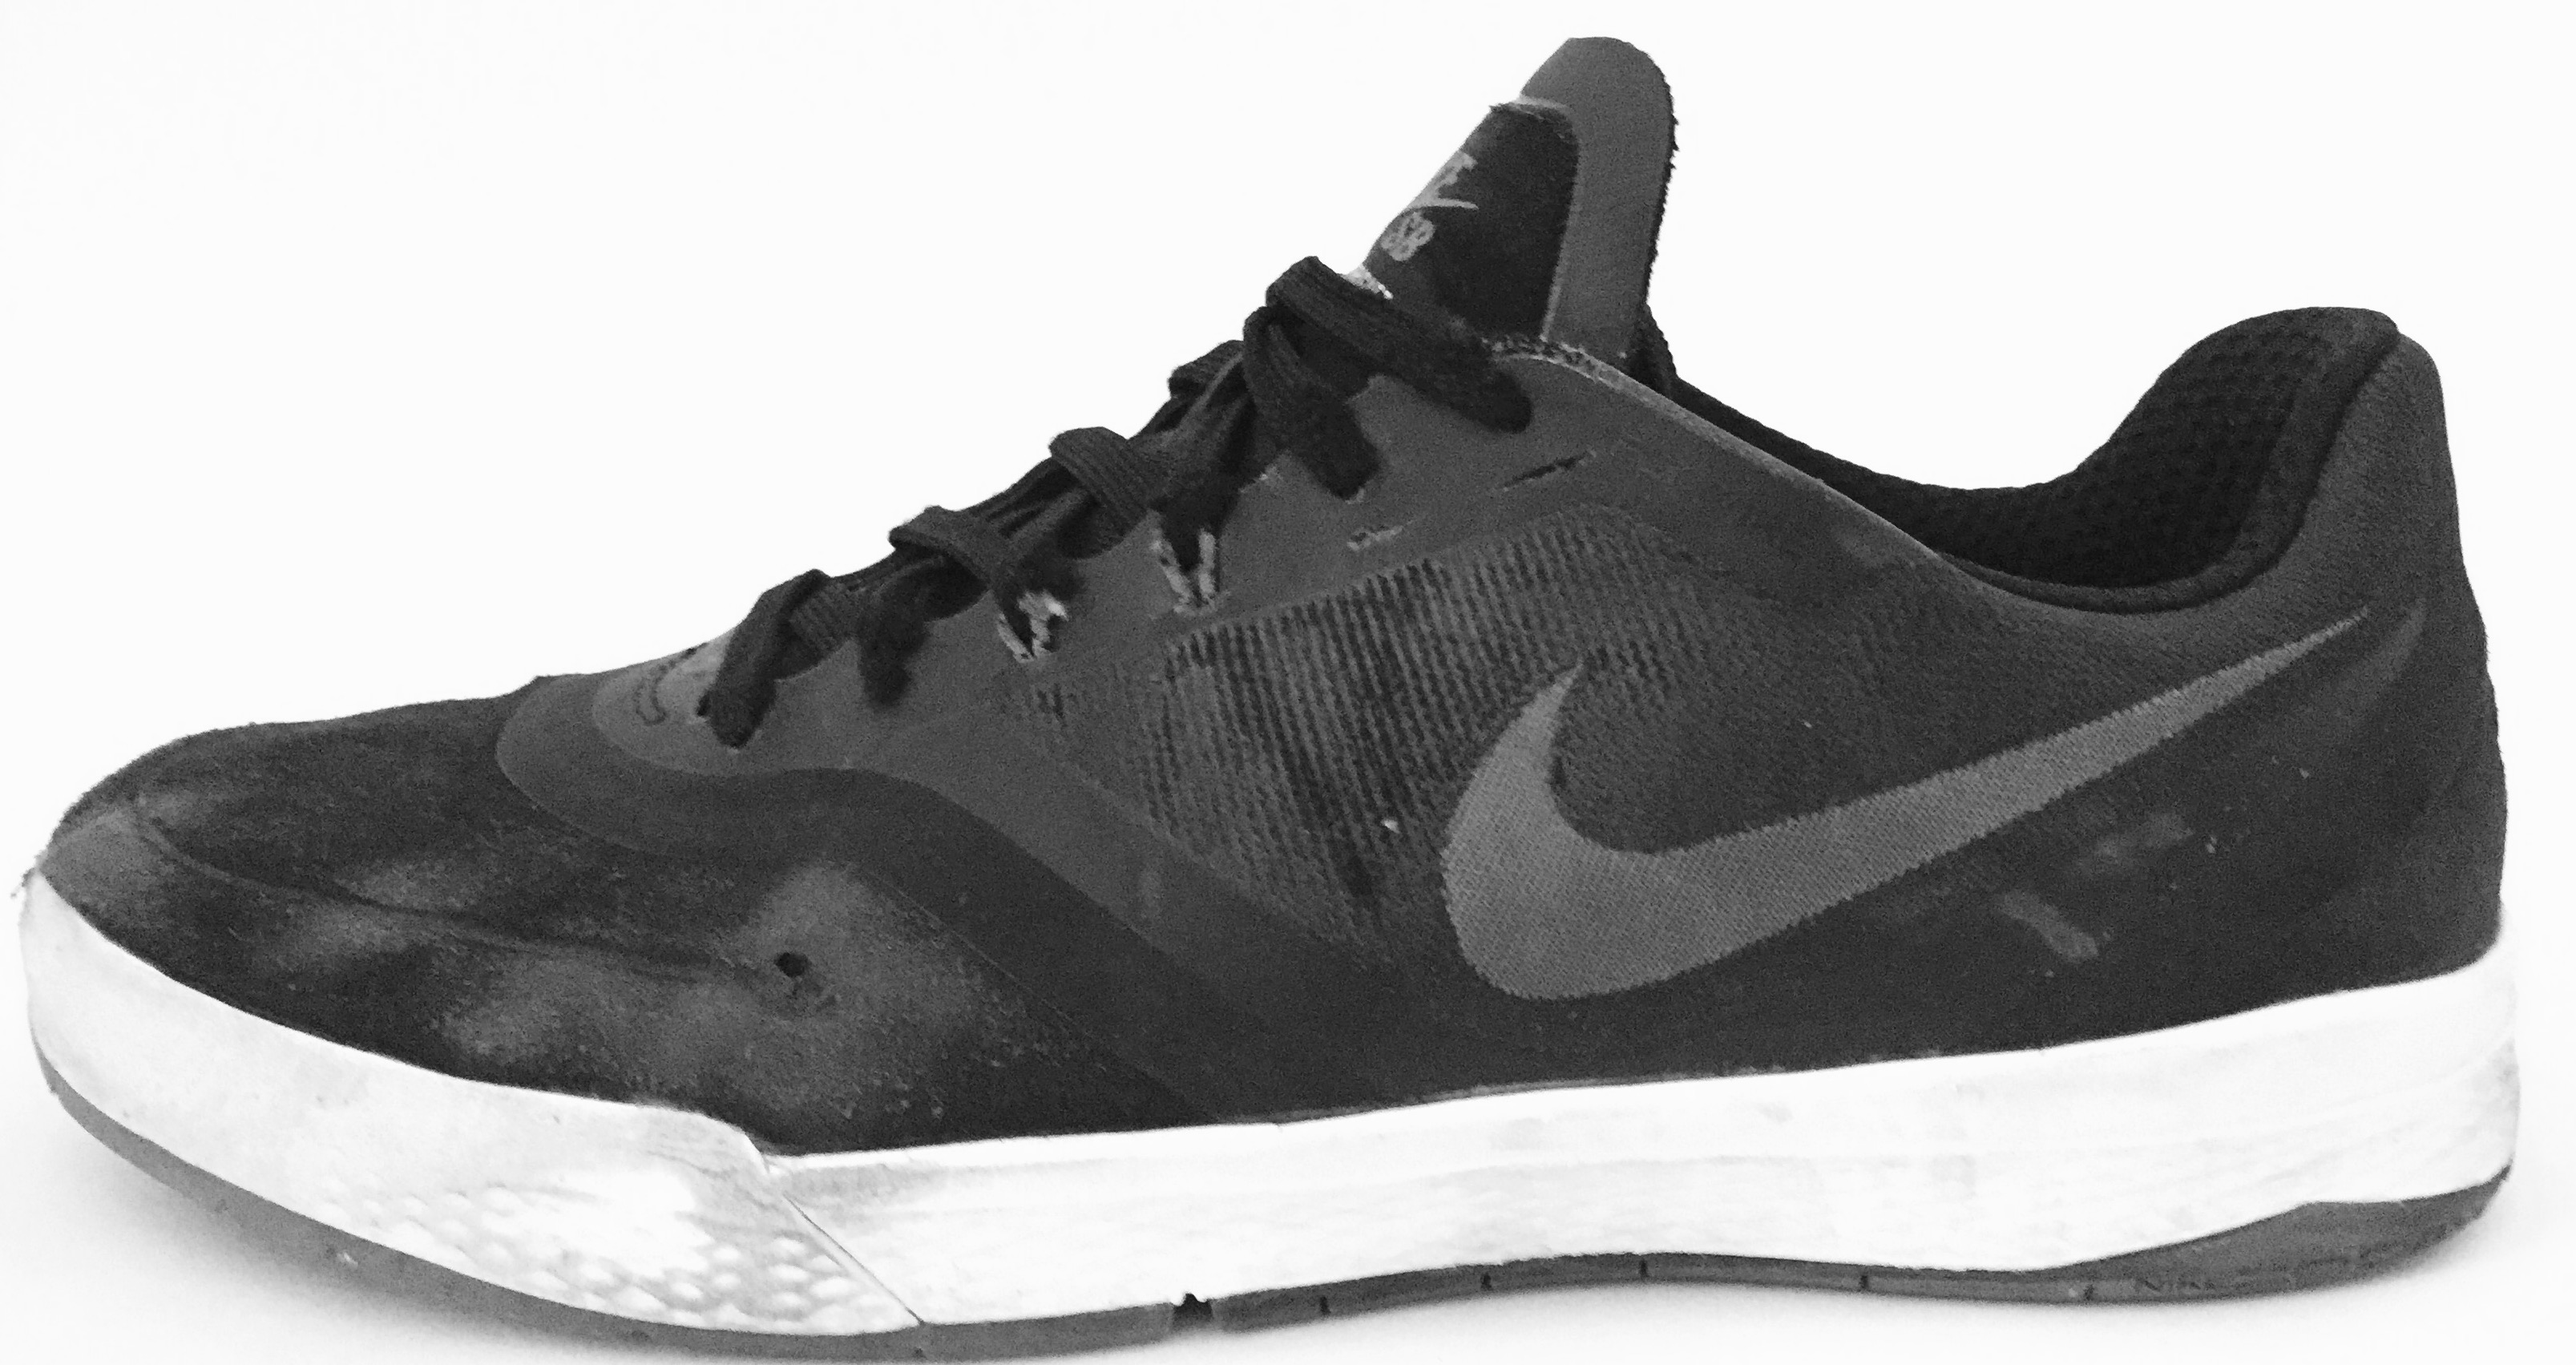 Groen ontwikkeling regelmatig Nike SB Paul Rodriguez P-Rod 9 - Weartested - detailed skate shoe reviews